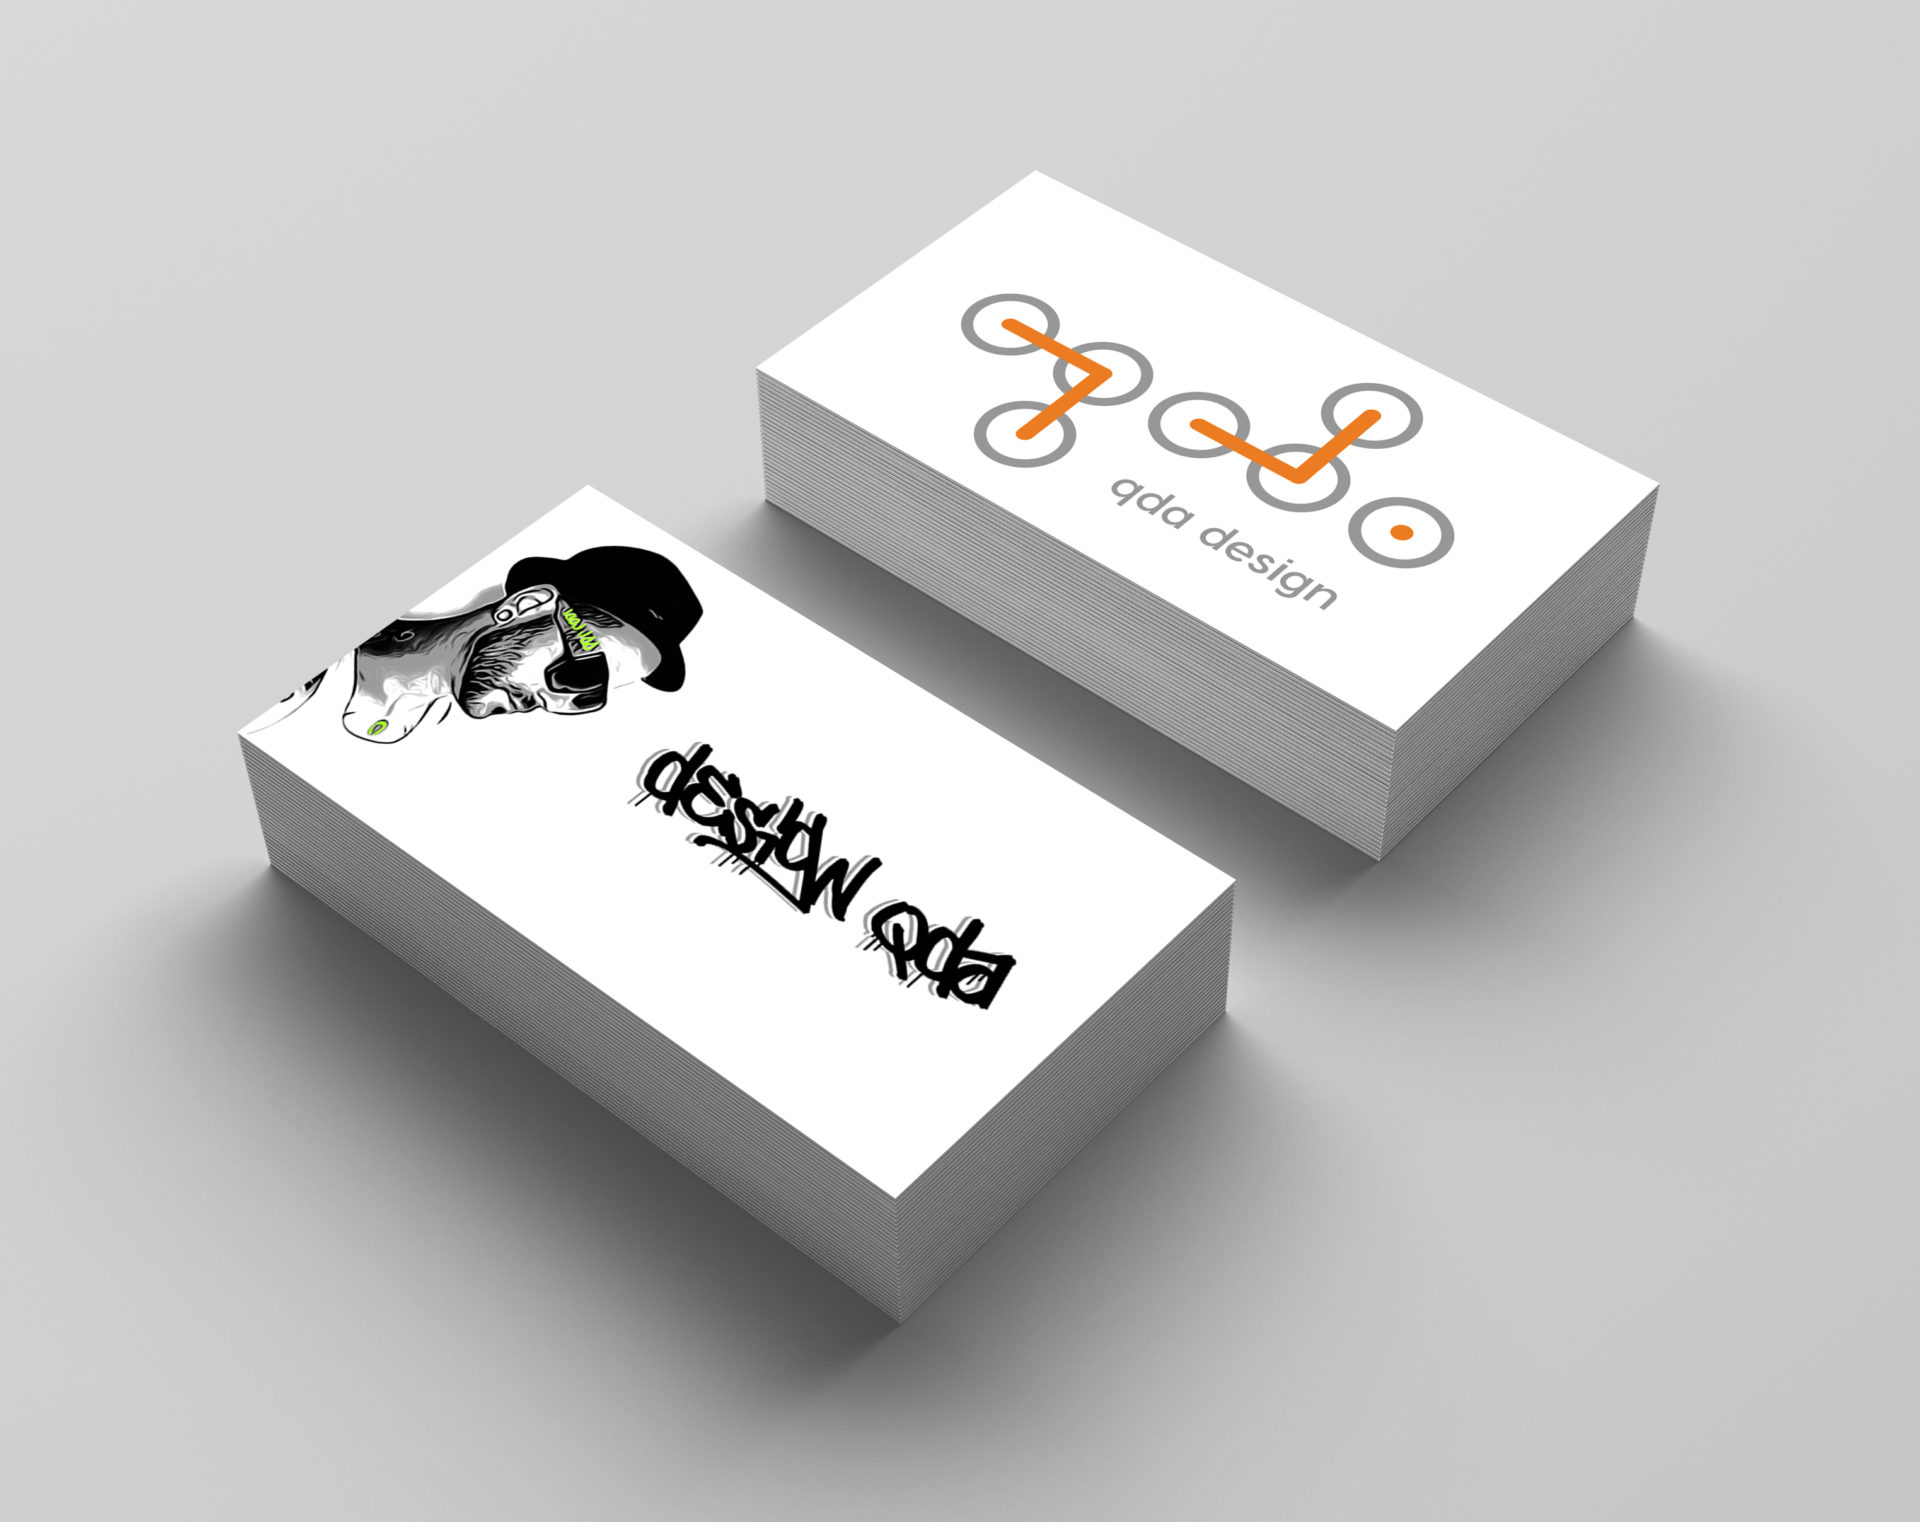 qda design visitenkarte mit logo qda design frühere versionen